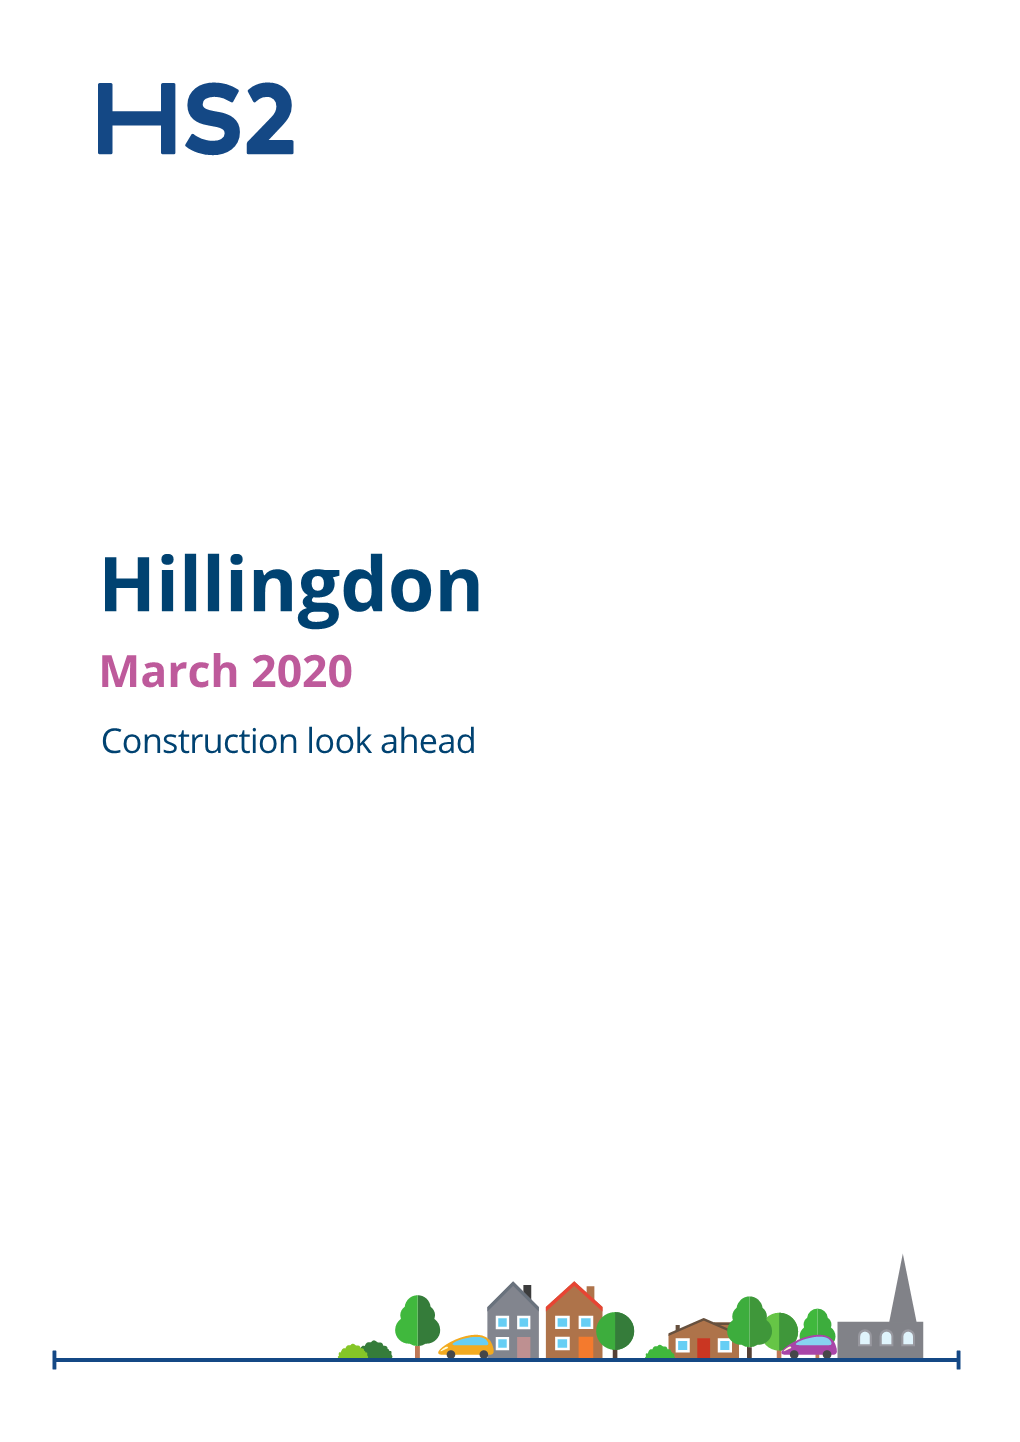 Hillingdon March 2020 Construction Look Ahead